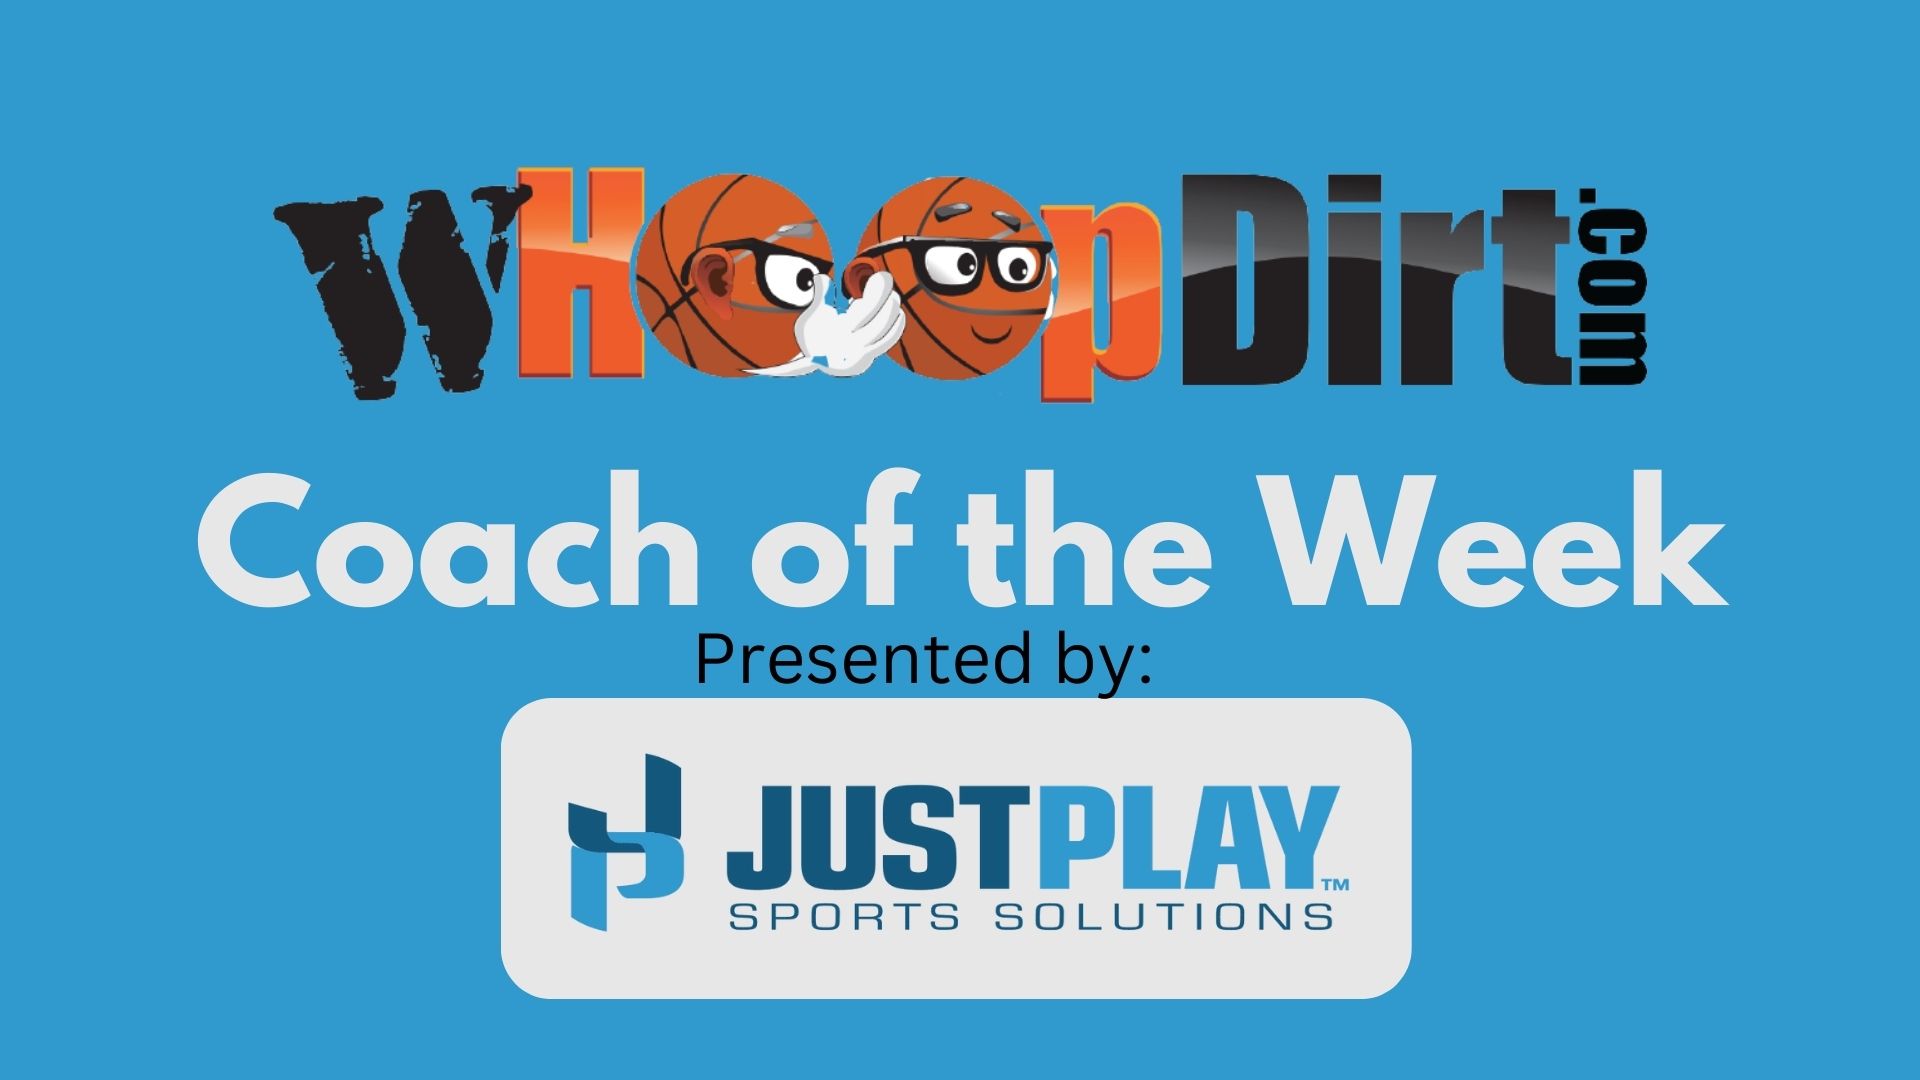  WEEK 1: WHoopDirt.com Coach of the Week presented by Just Play Solutions - Women's HoopDirt 